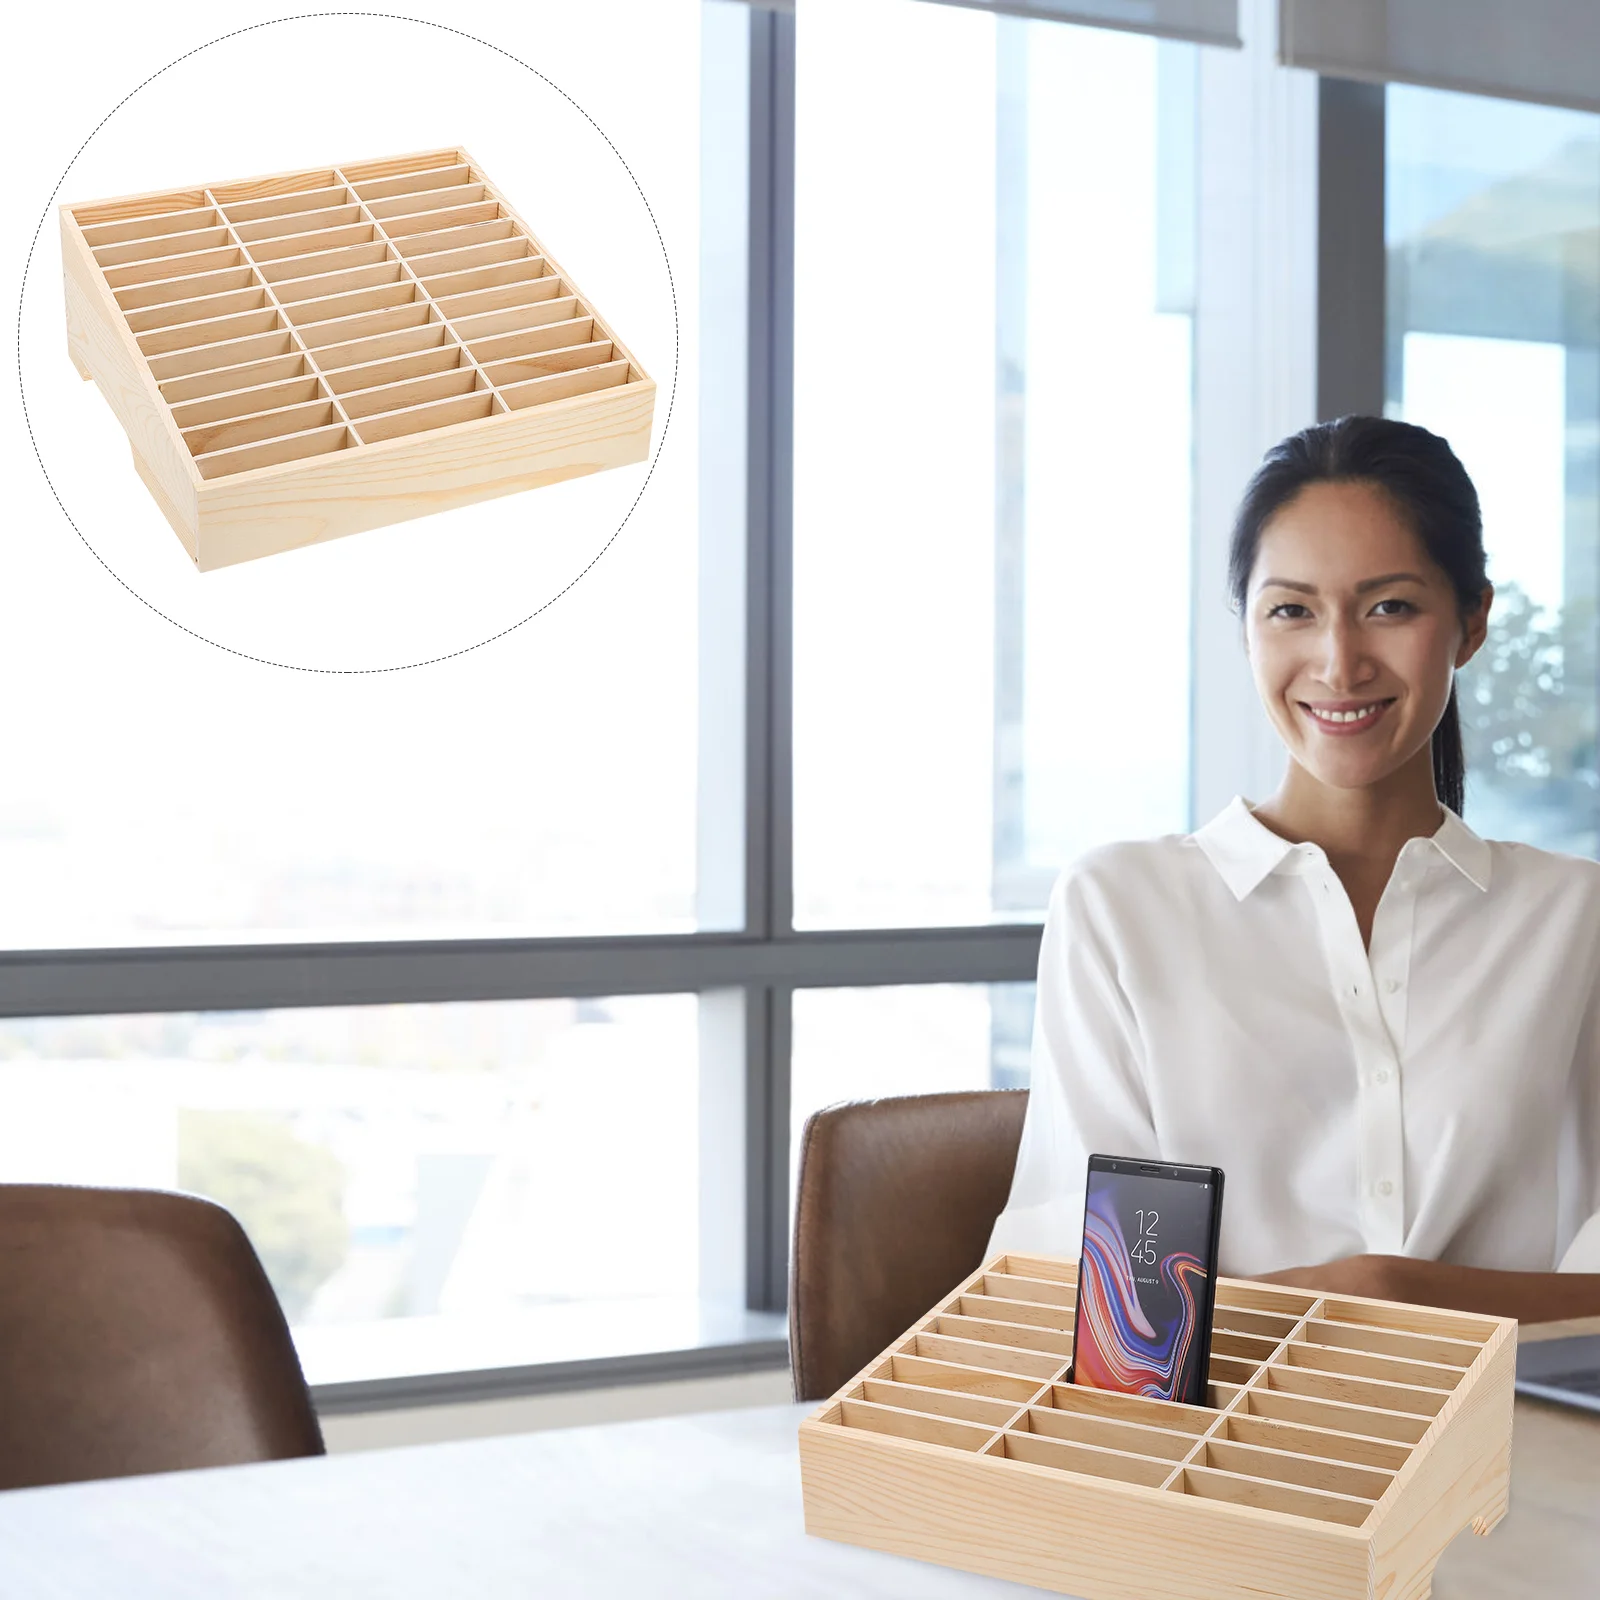 

Box Storage Cell Wooden Organizer Desktop Mobile Holder Grid Multi Case Rack Display Management Classroom Table Room Meeting